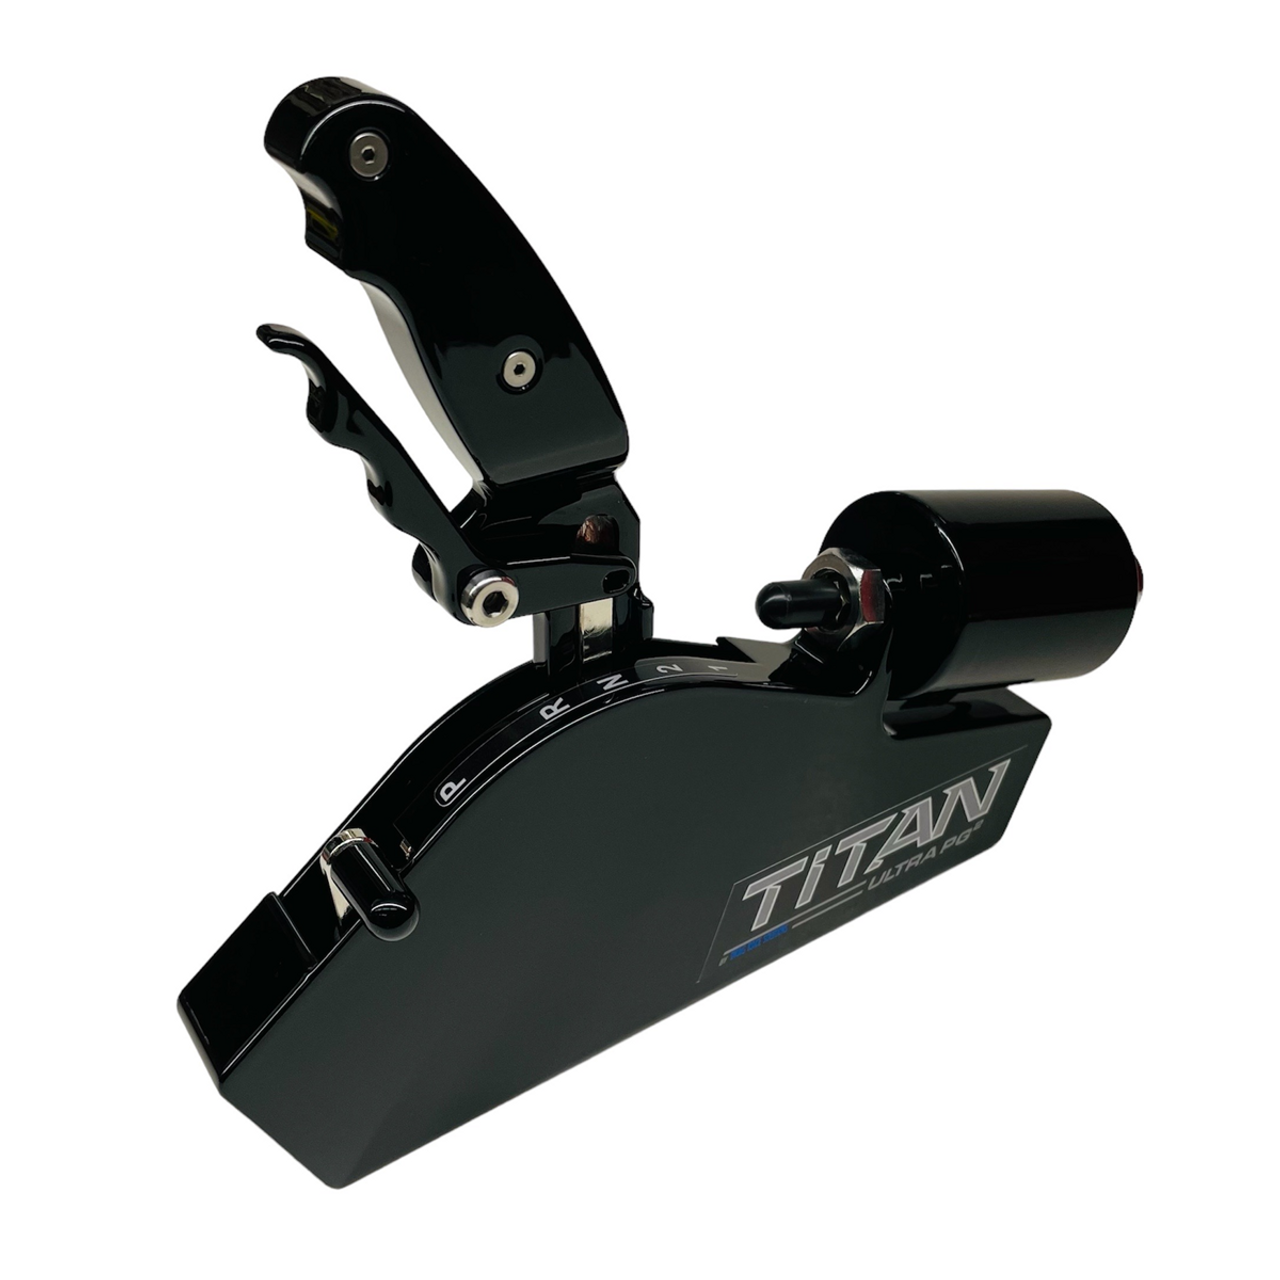 Titan Electric Powerglide Shifter - Gloss Black